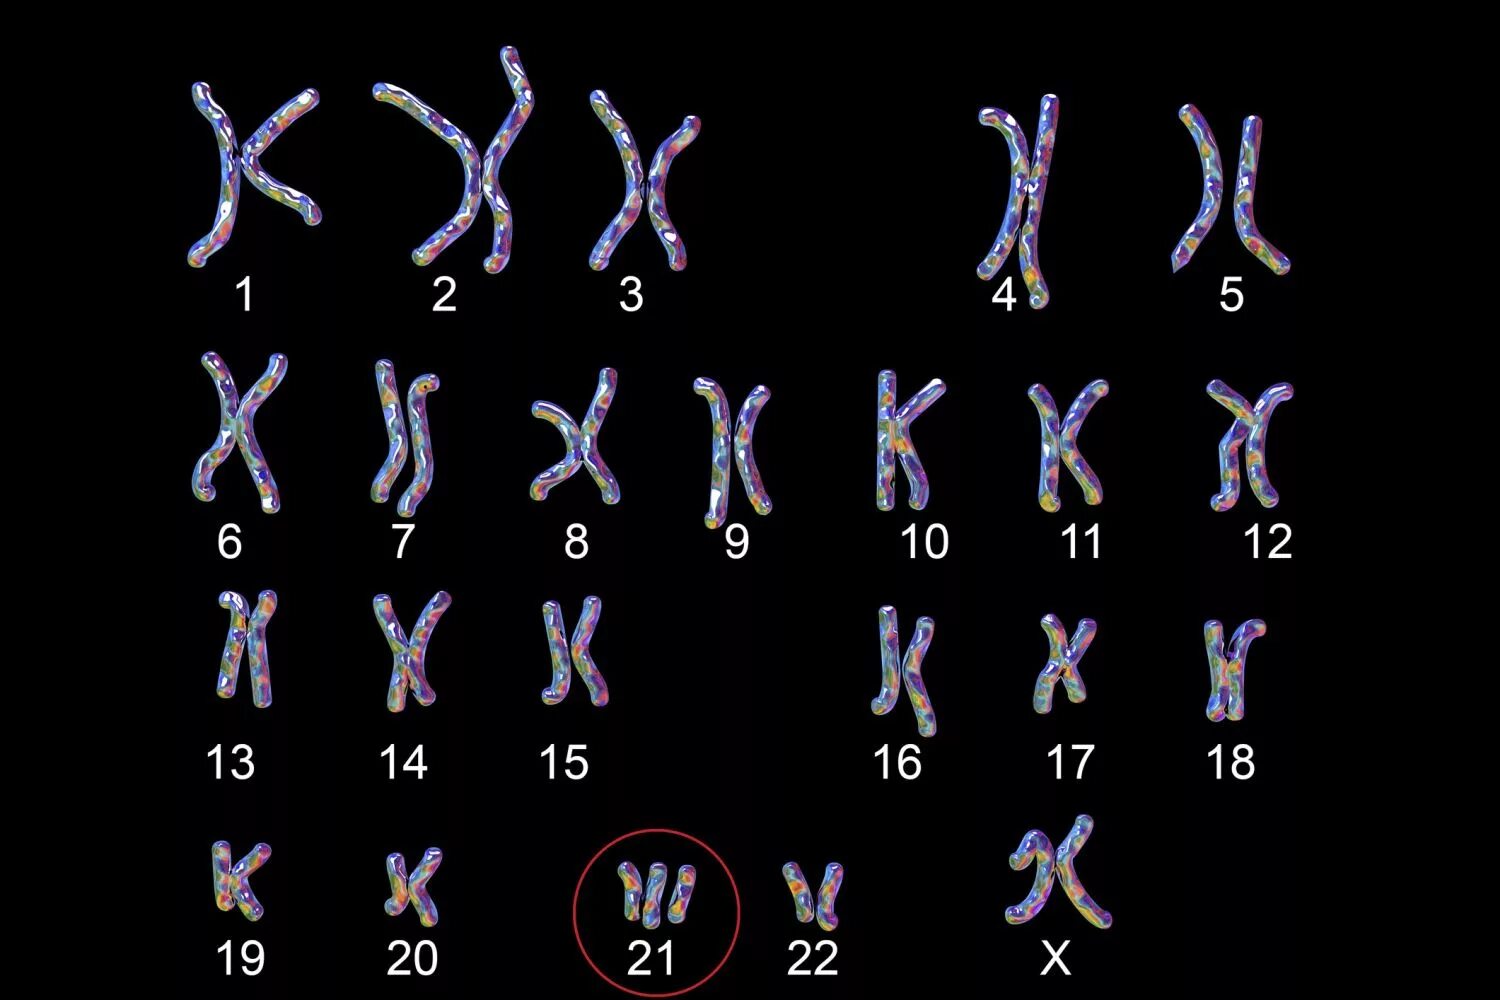 Синдром Дауна 21 хромосома. Трисомия 21 хромосомы (синдром Дауна кариотип. Синдром Дауна хромосомы кариотип. Лишняя 21 хромосома